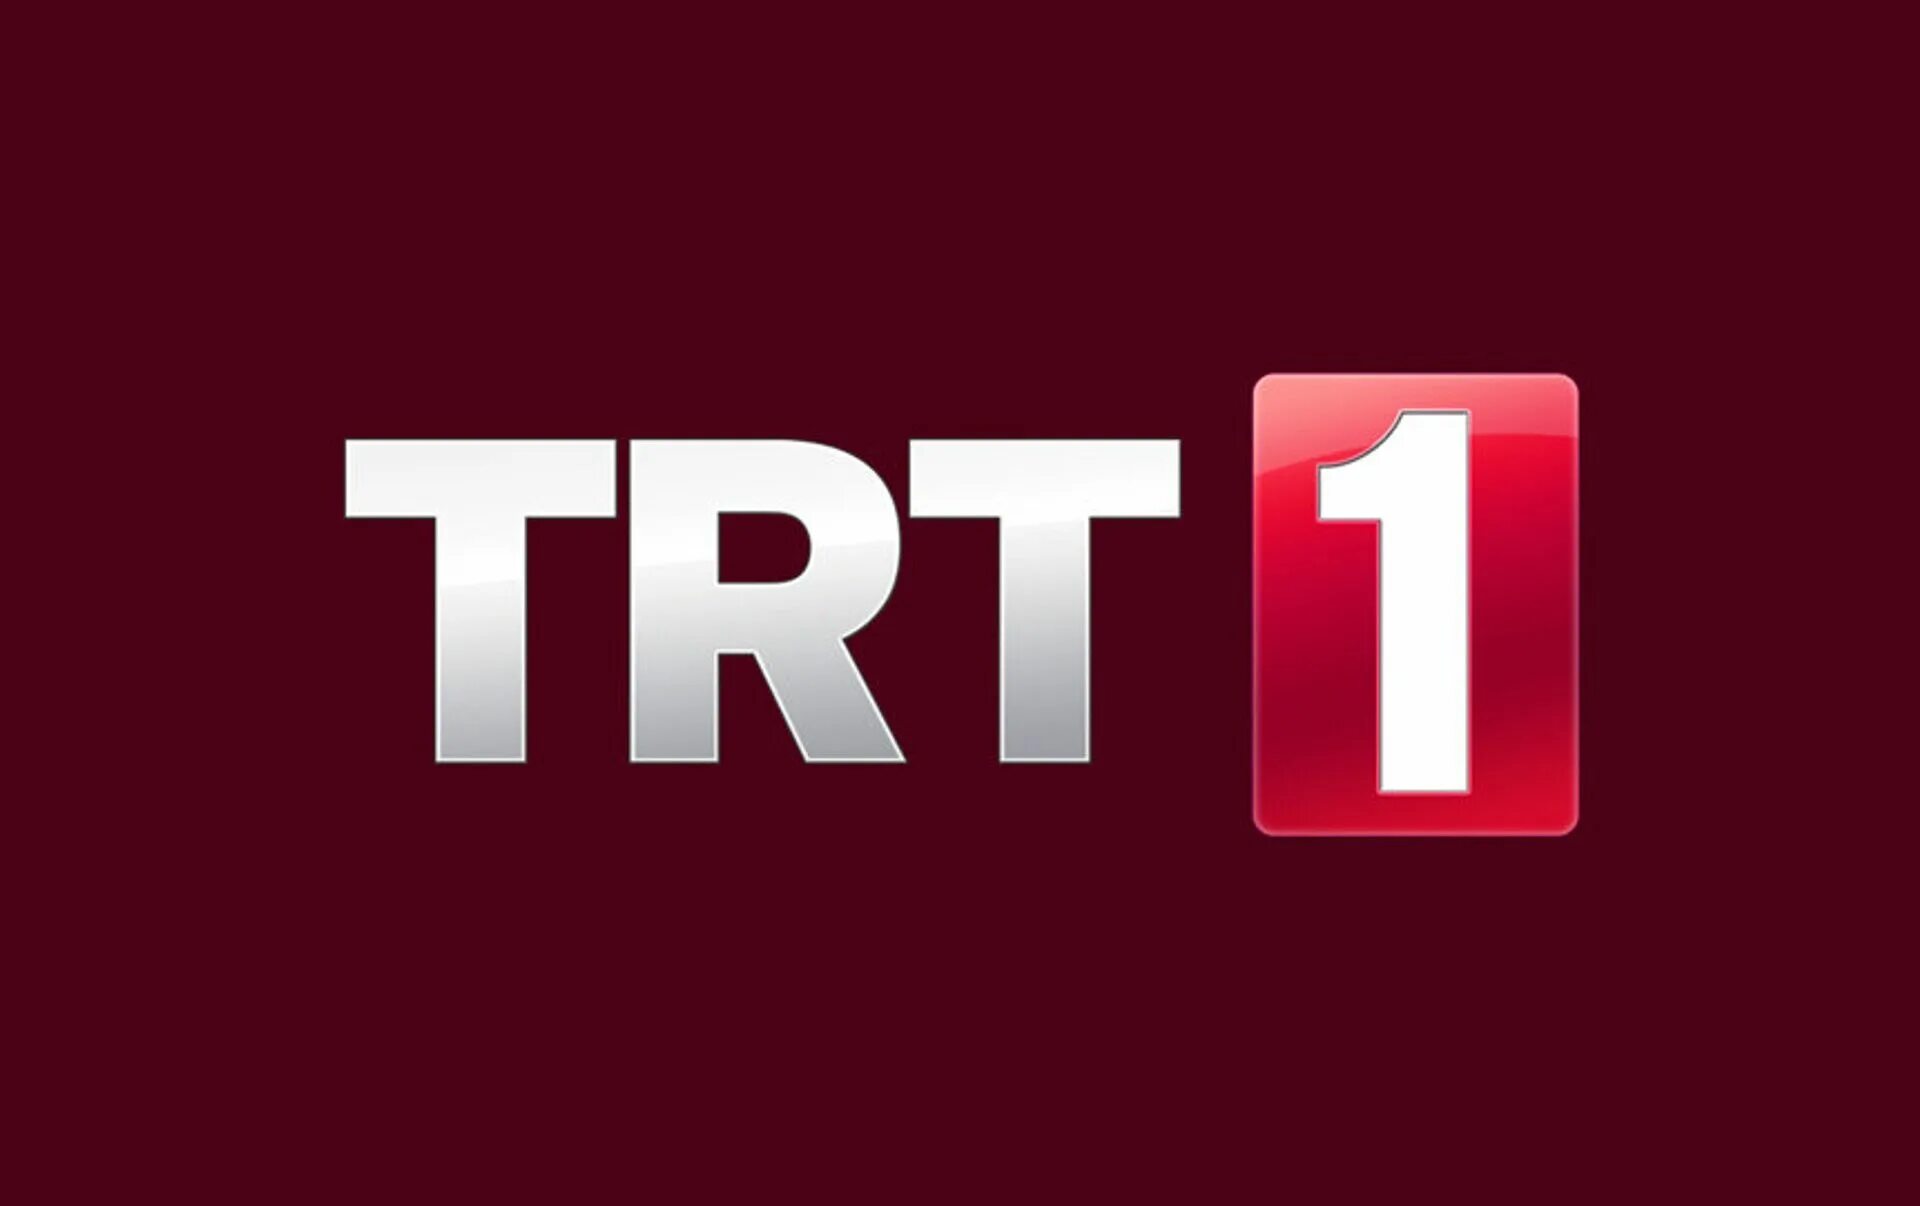 Trt canlı yayın. Турецкий Телеканал TRT.. TRT 1 канал. TRT логотип. Турецкие Телеканалы.